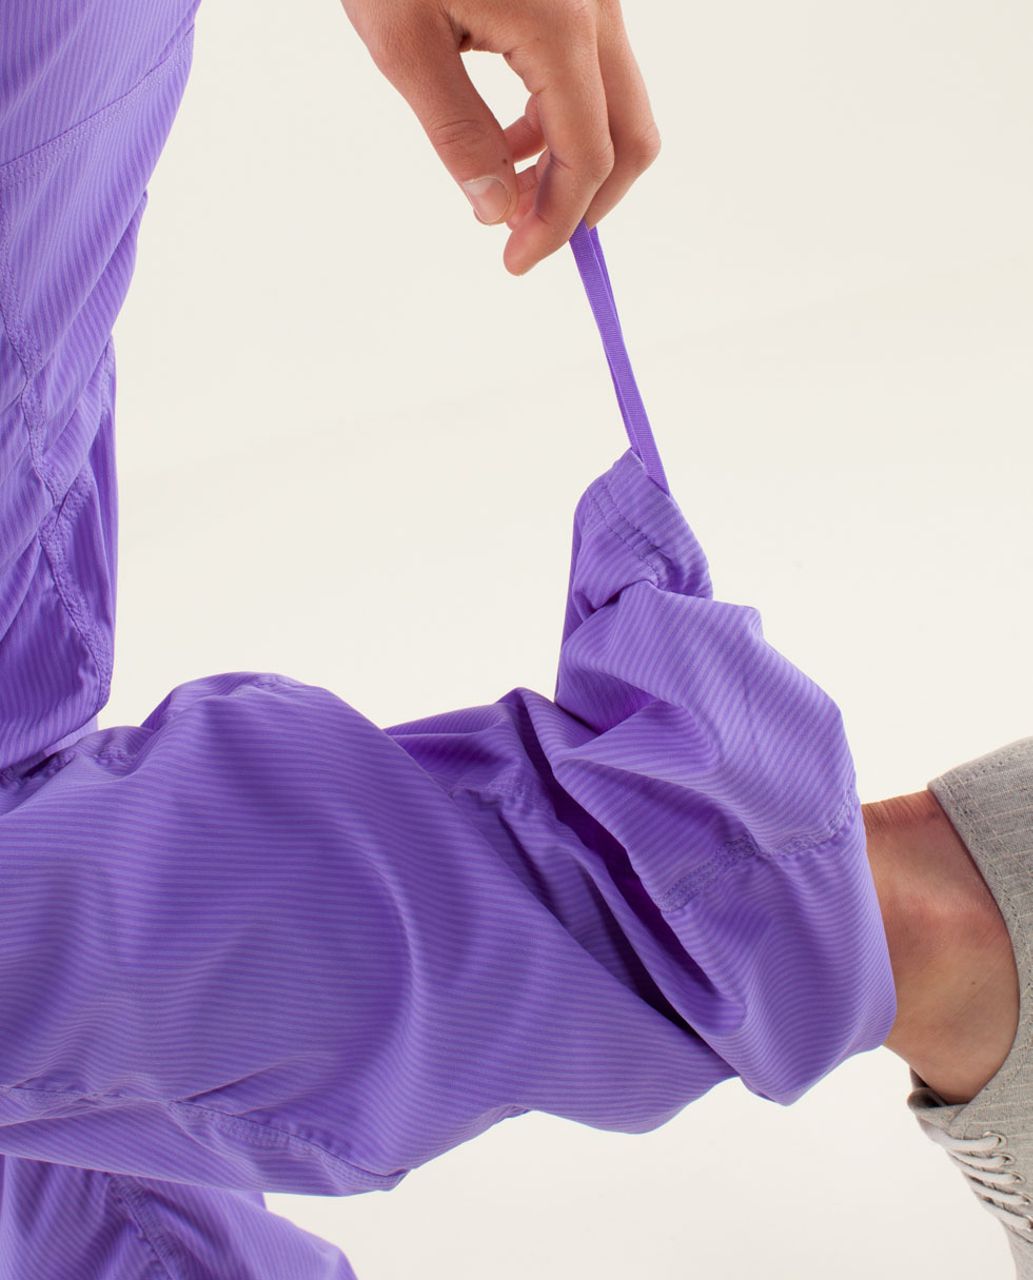 Lululemon Street To Studio Pants Plum Purple Size 4 - $60 (38% Off Retail)  - From Bailey